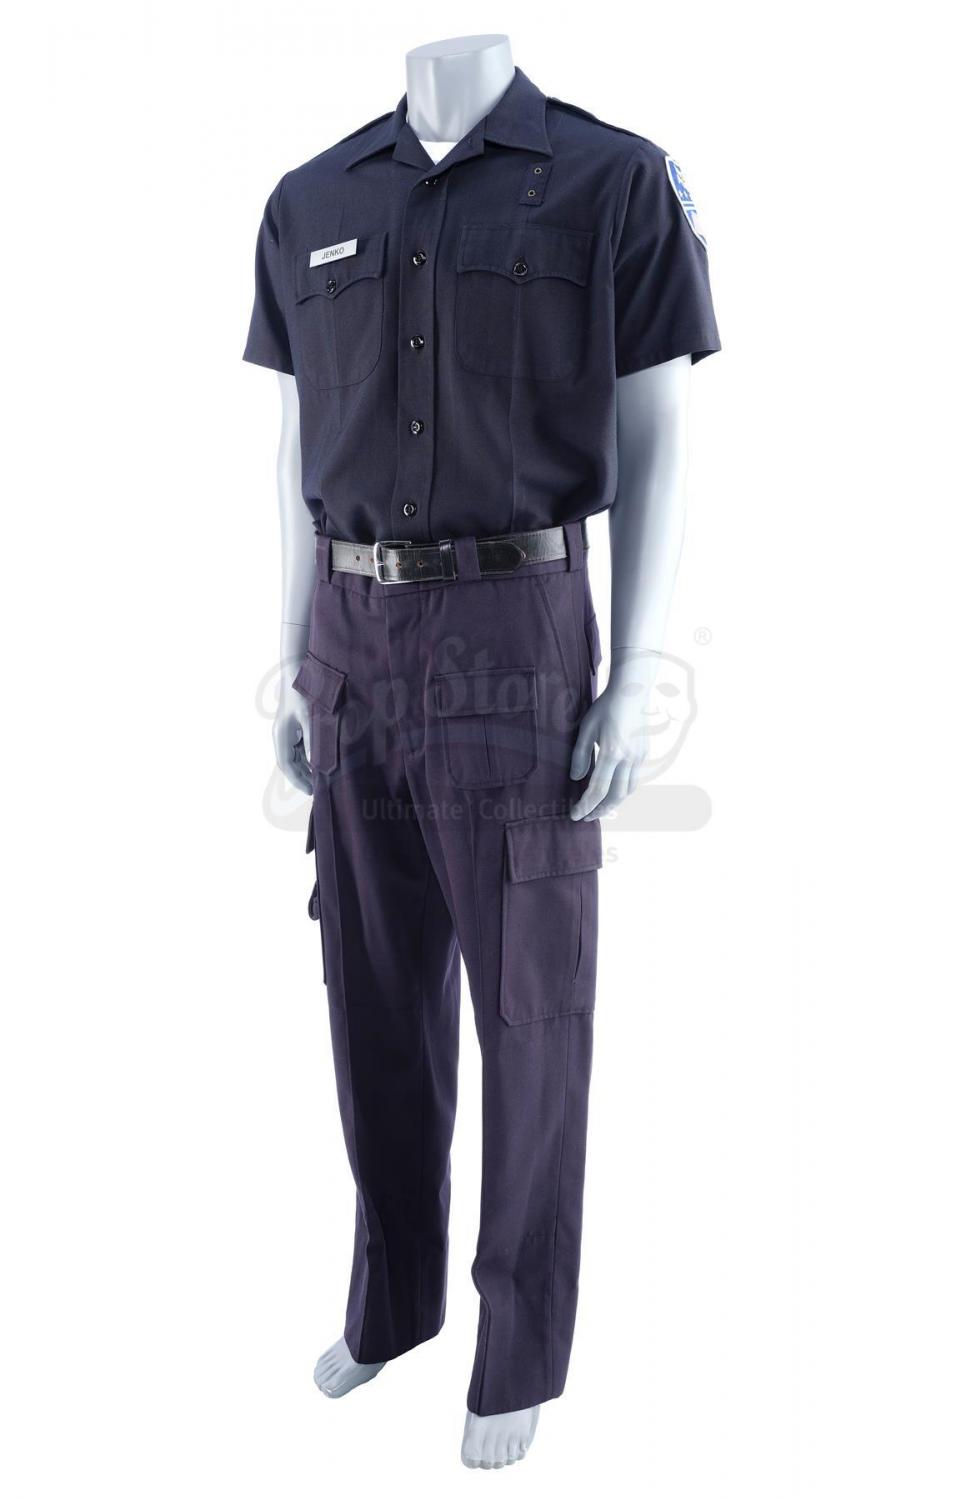 Lot #3 - 21 JUMP STREET (2012) - Jenko's (Channing Tatum) Police Uniform